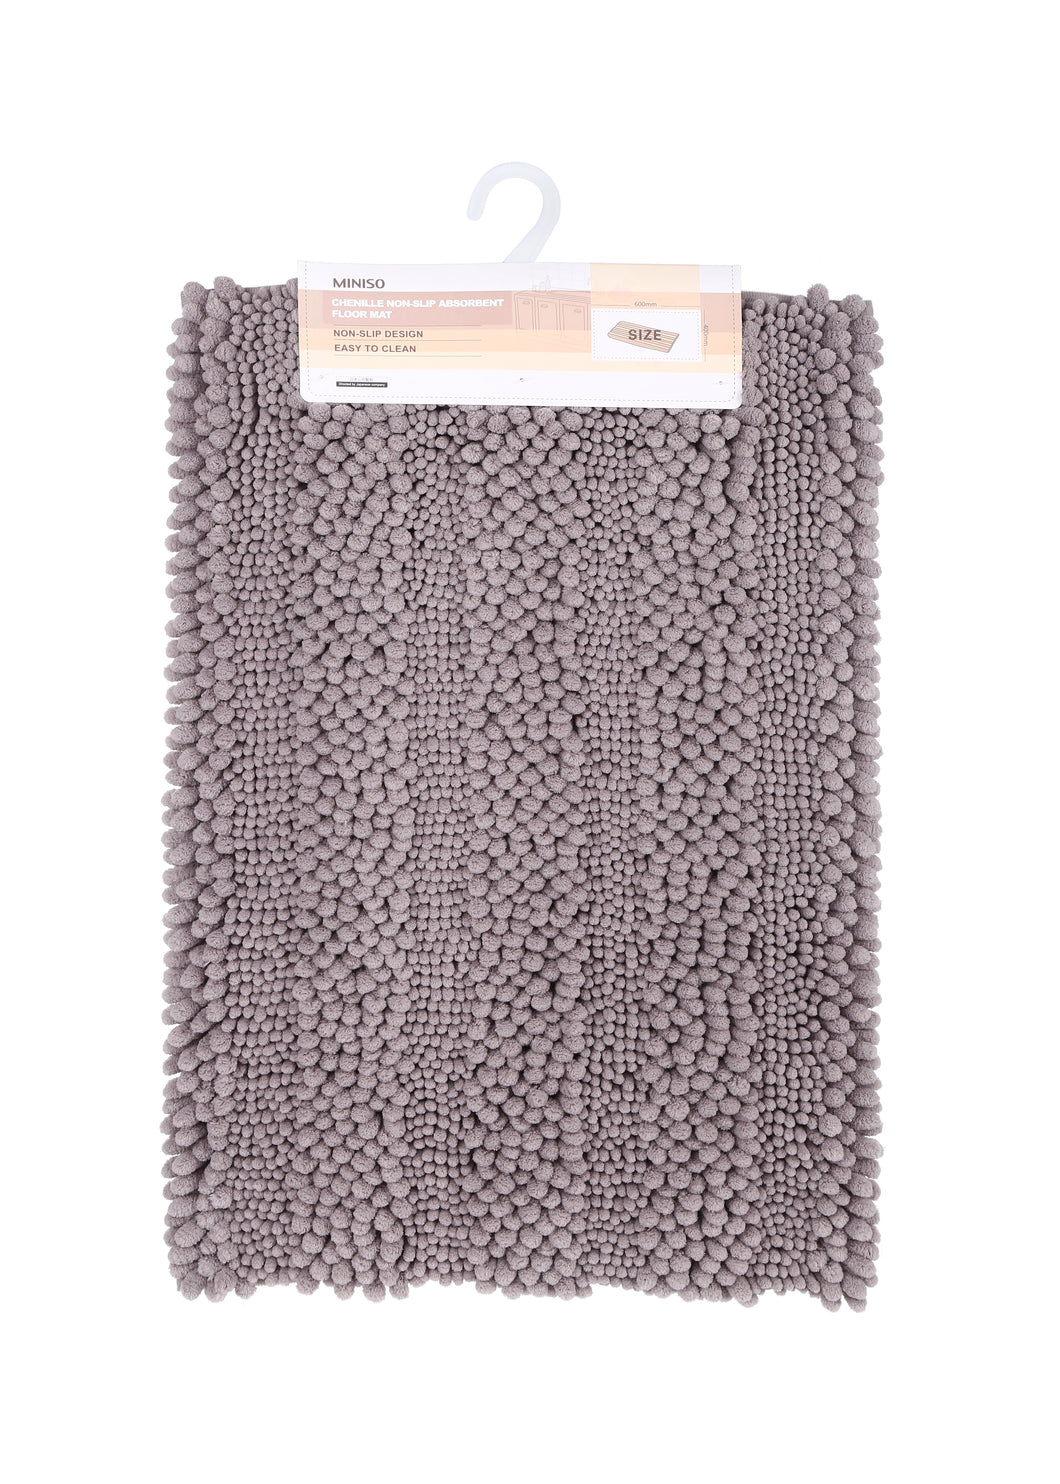 Chenille Non-slip Absorbent Floor Mat(Grey)